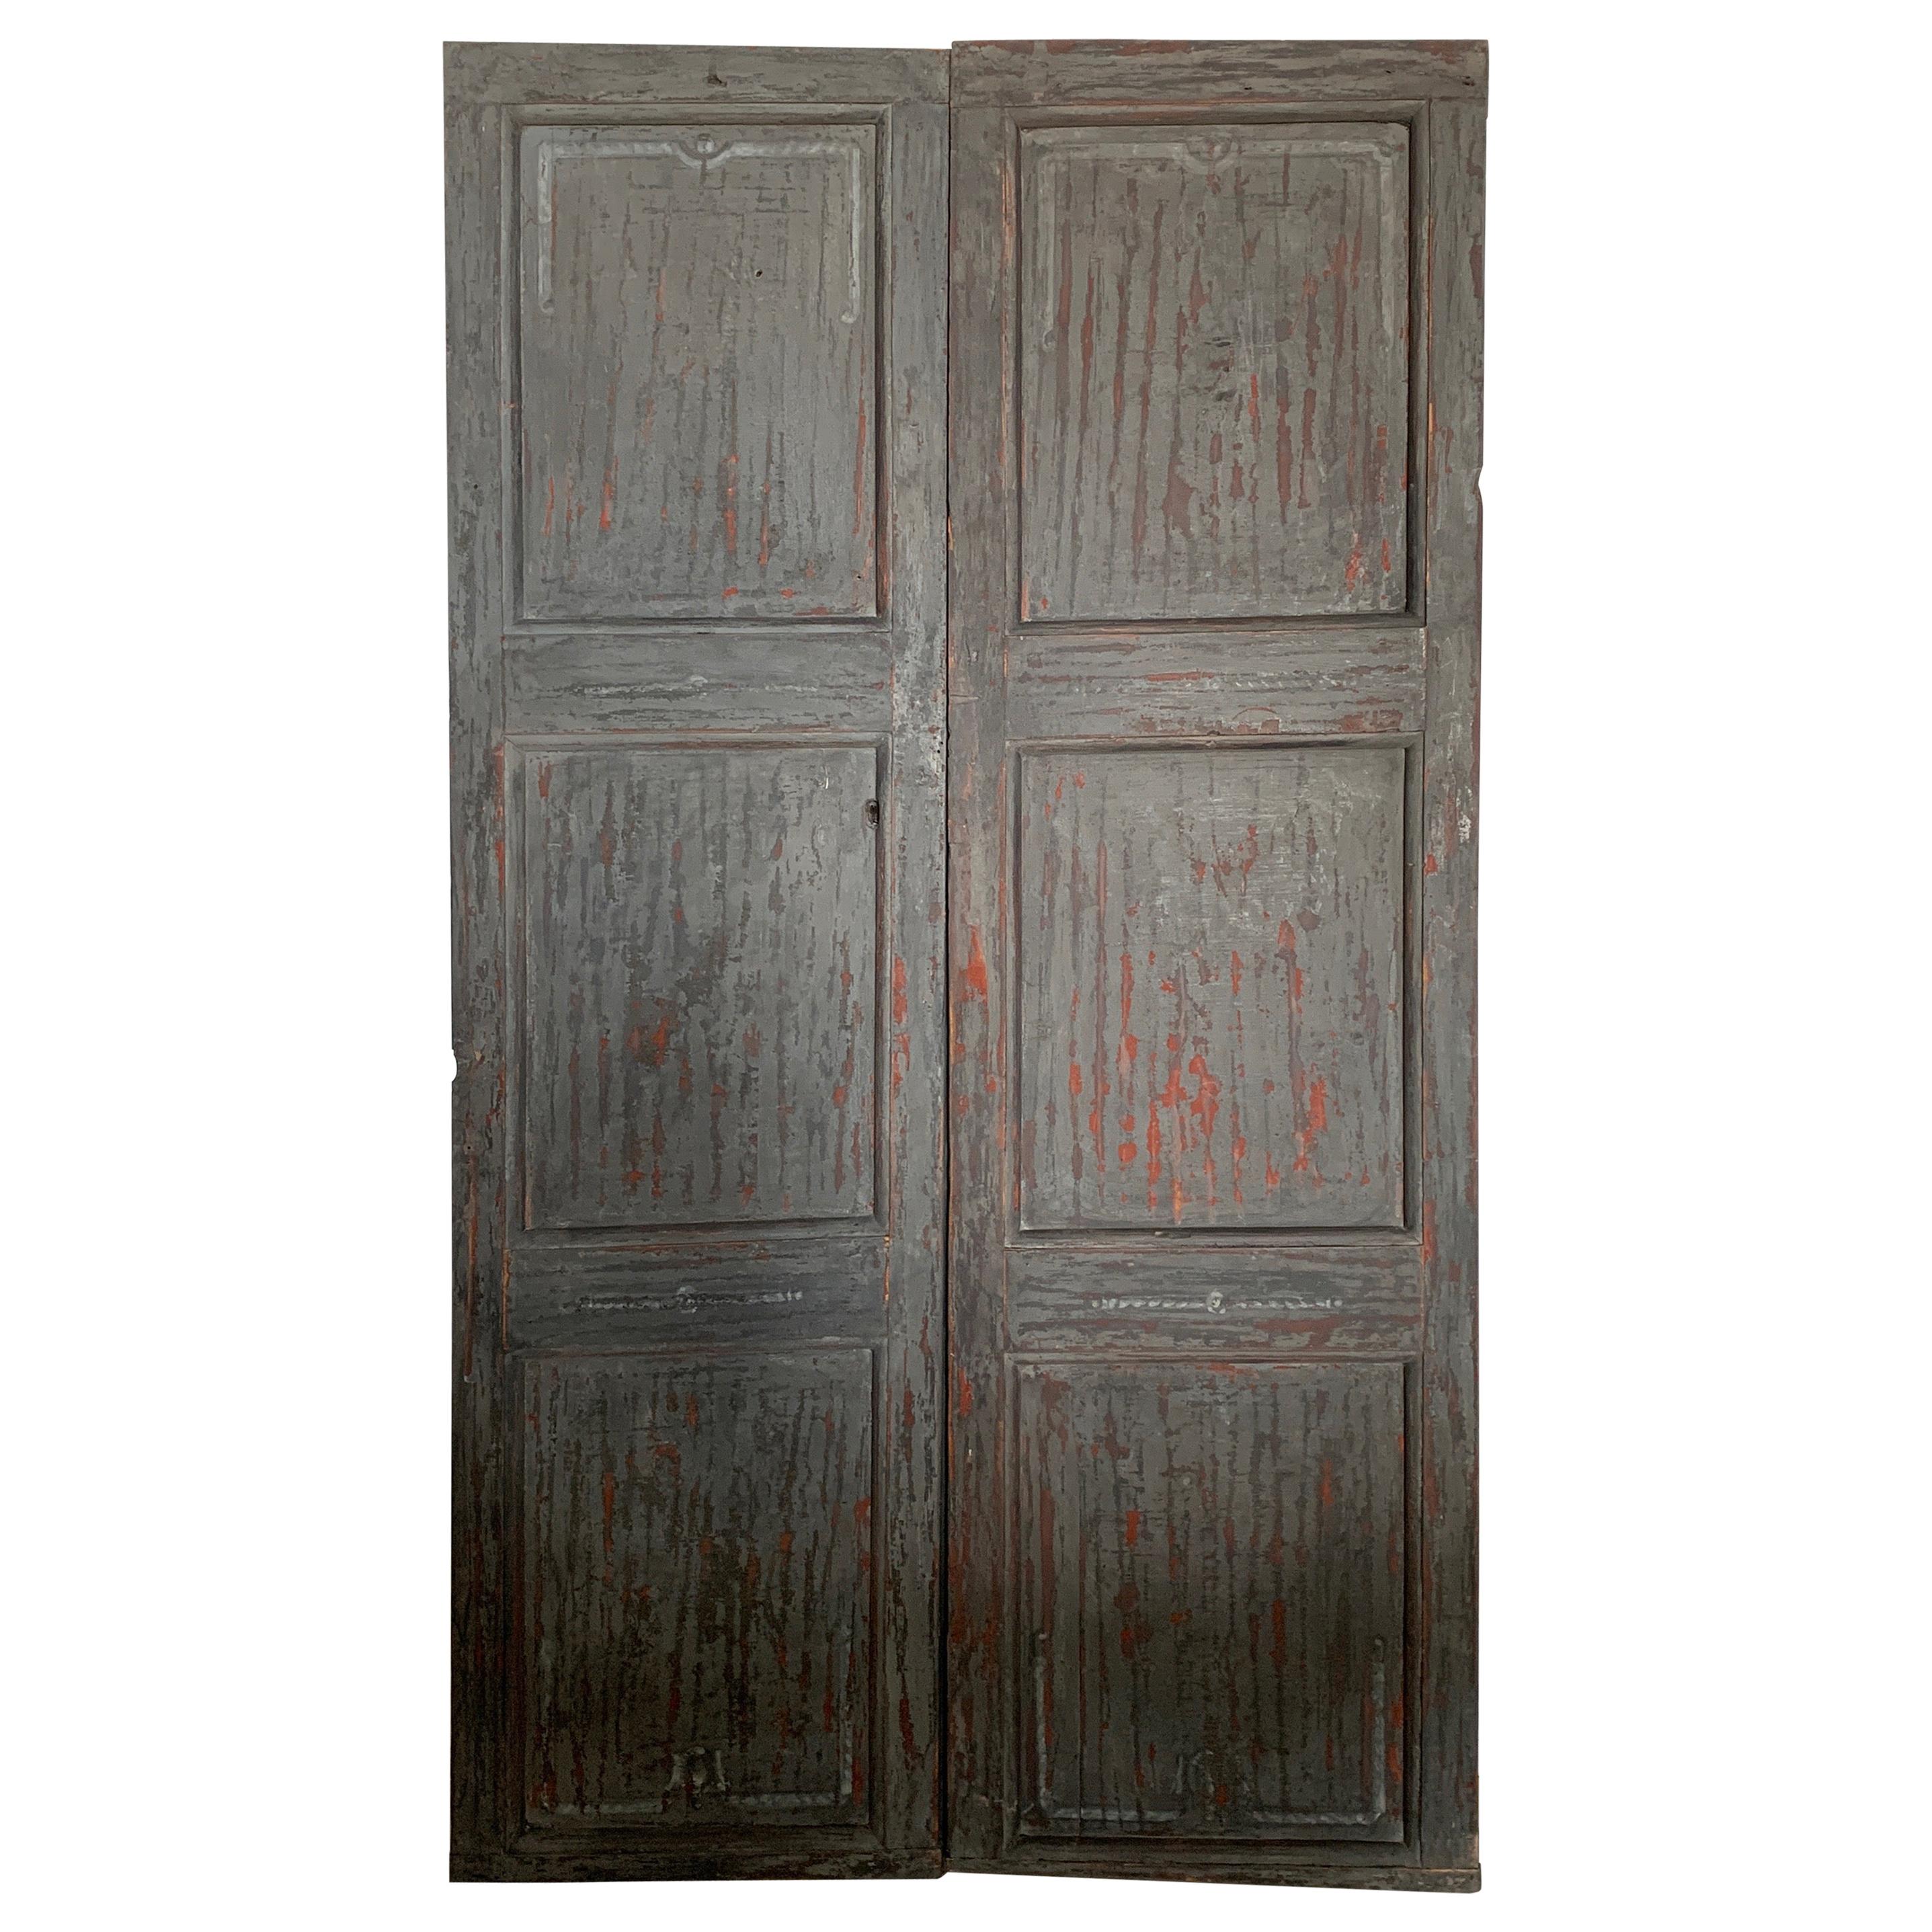 18th Century Spanish Pair of Doors from Peralada with Original Hardware